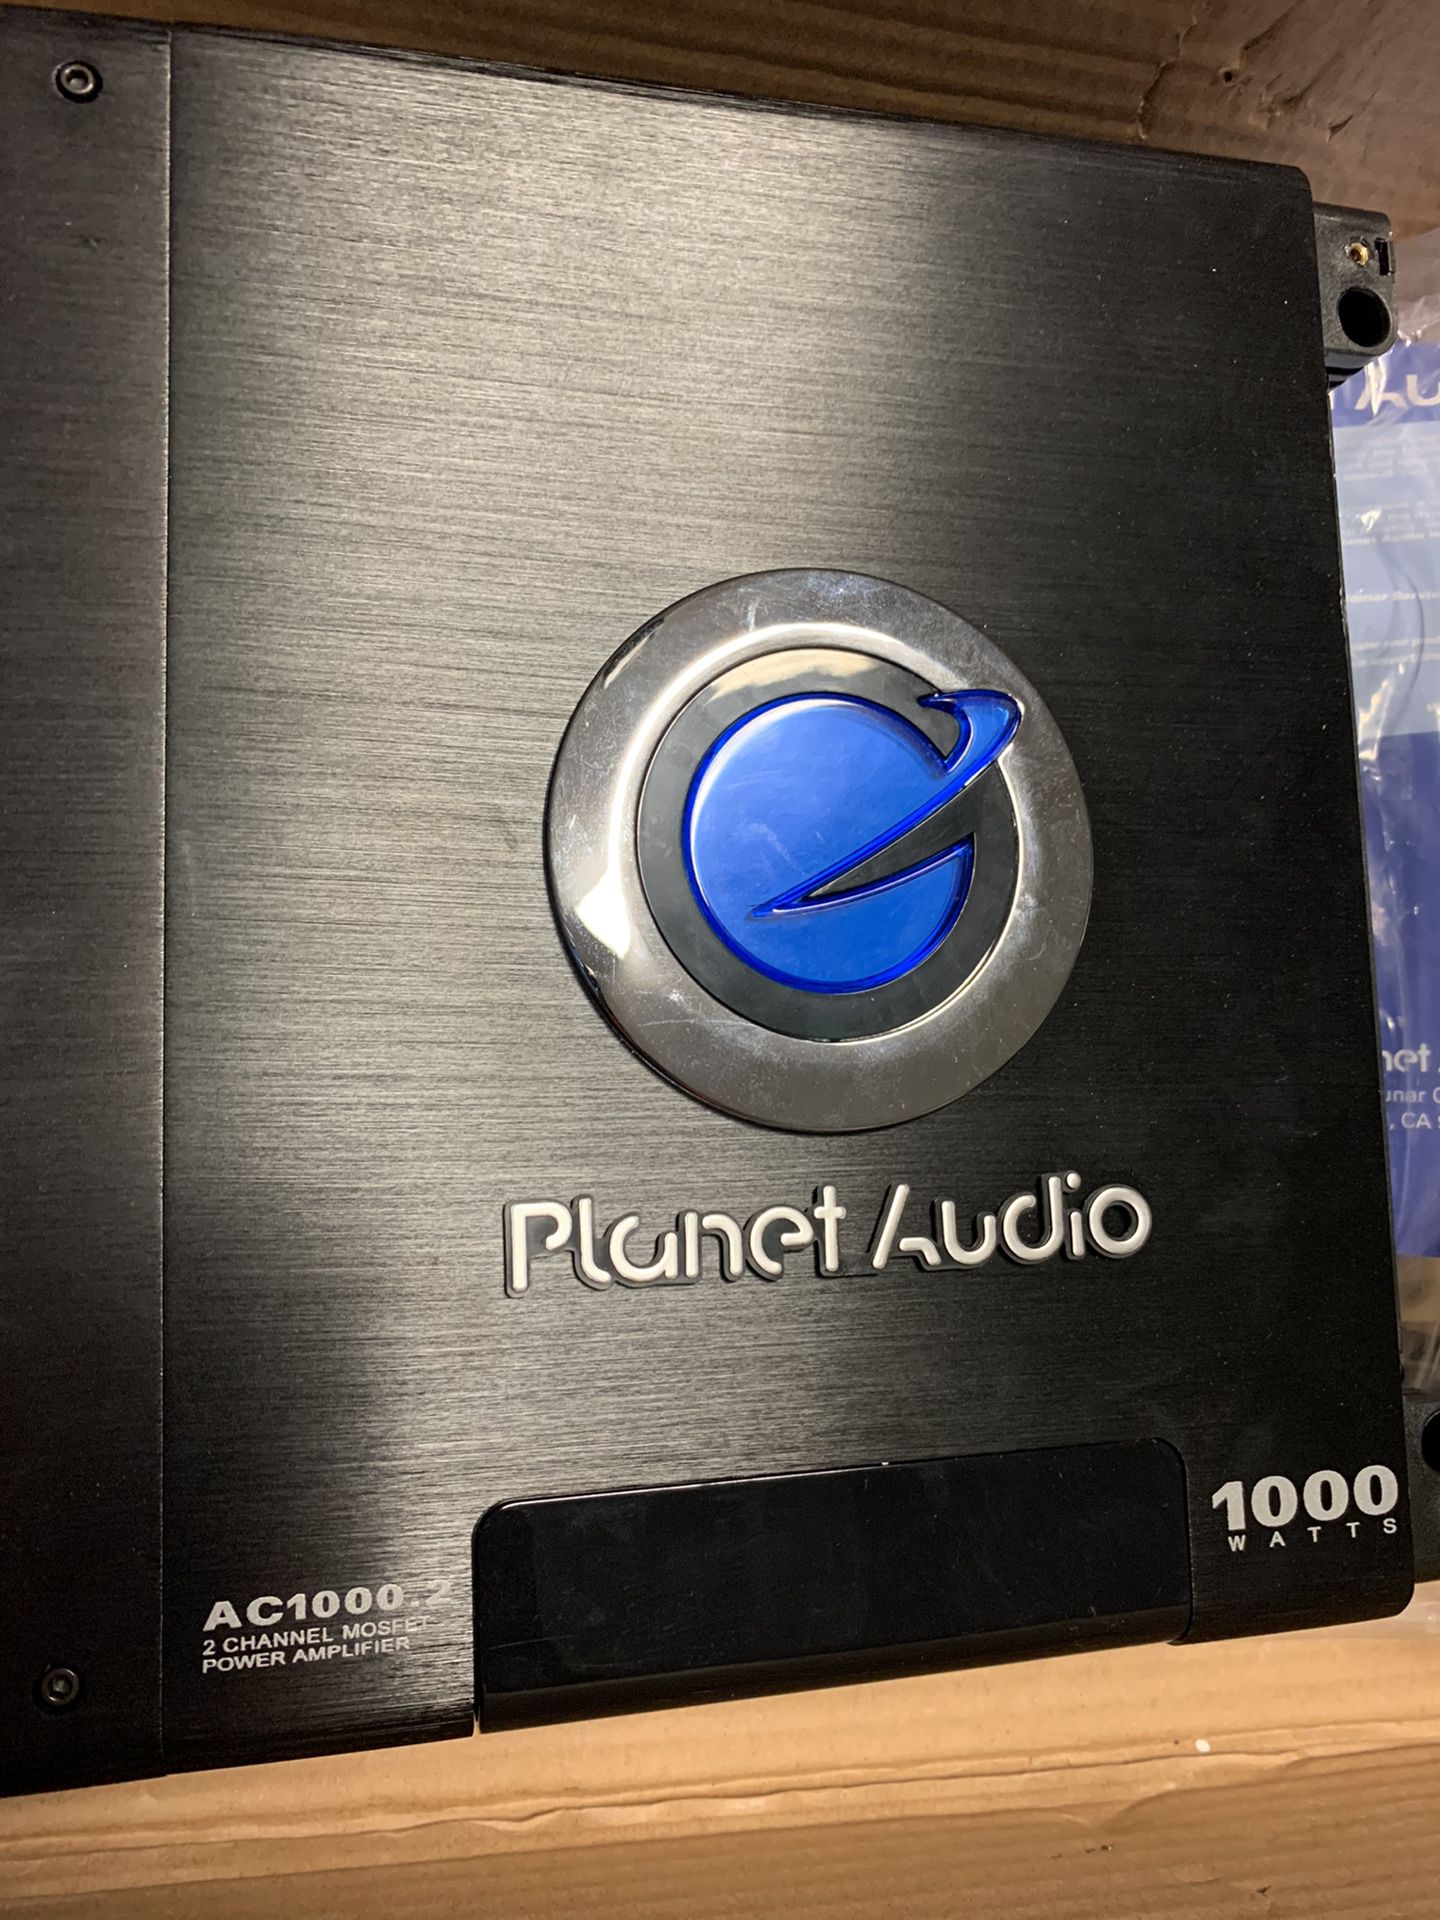 Planet audio 1000watts amp